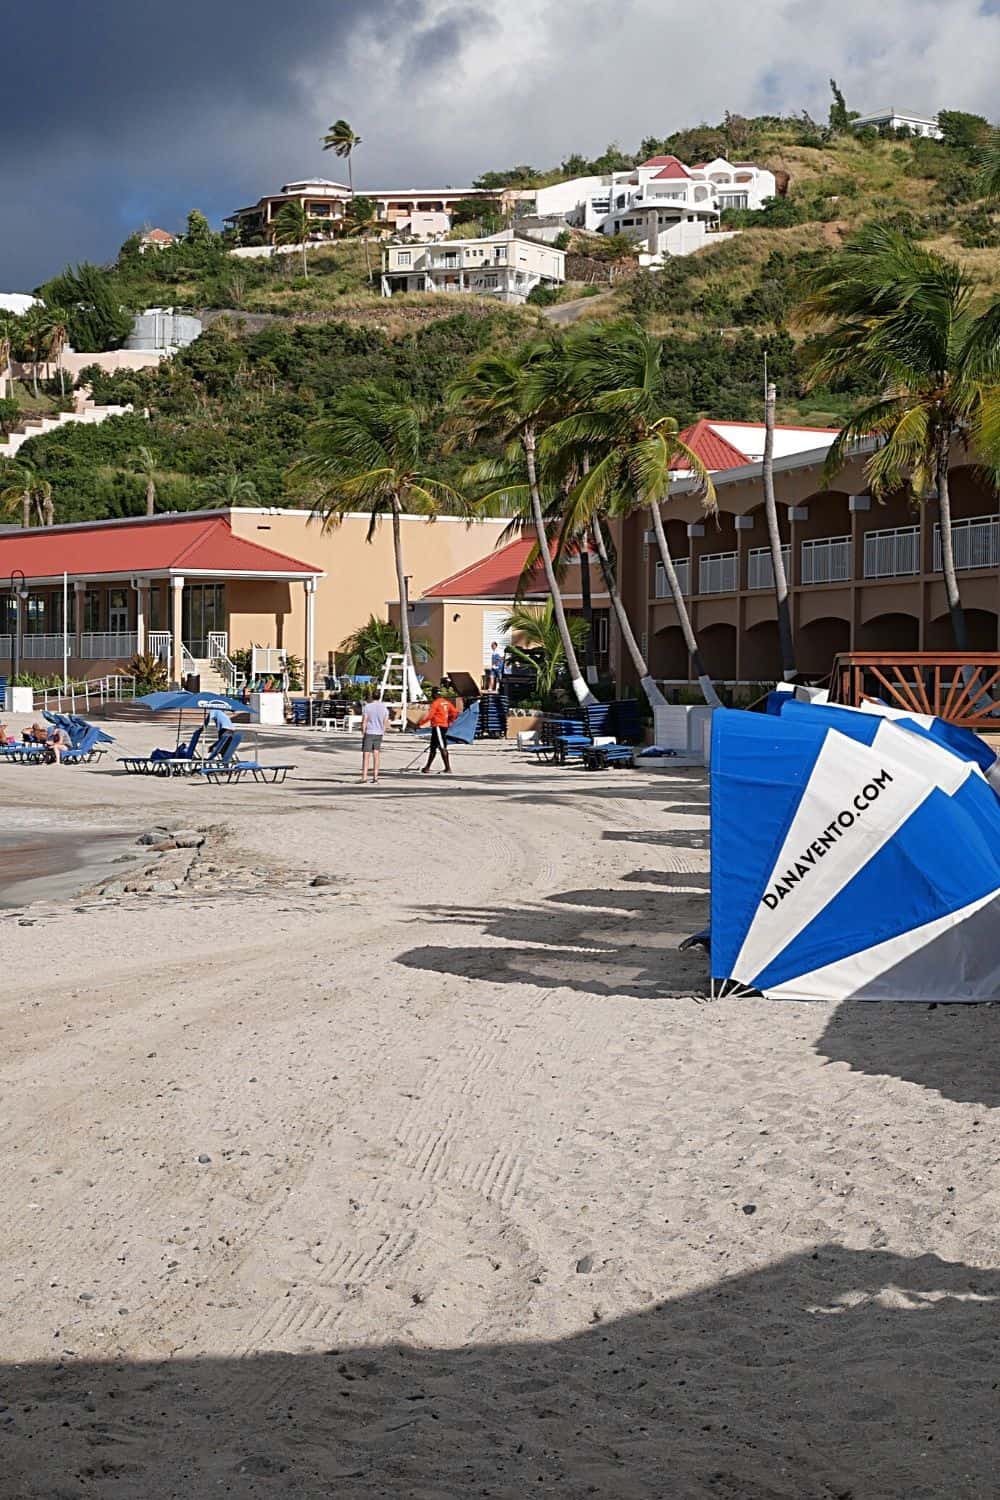 Divi St. Maarten activities beyond the beach   